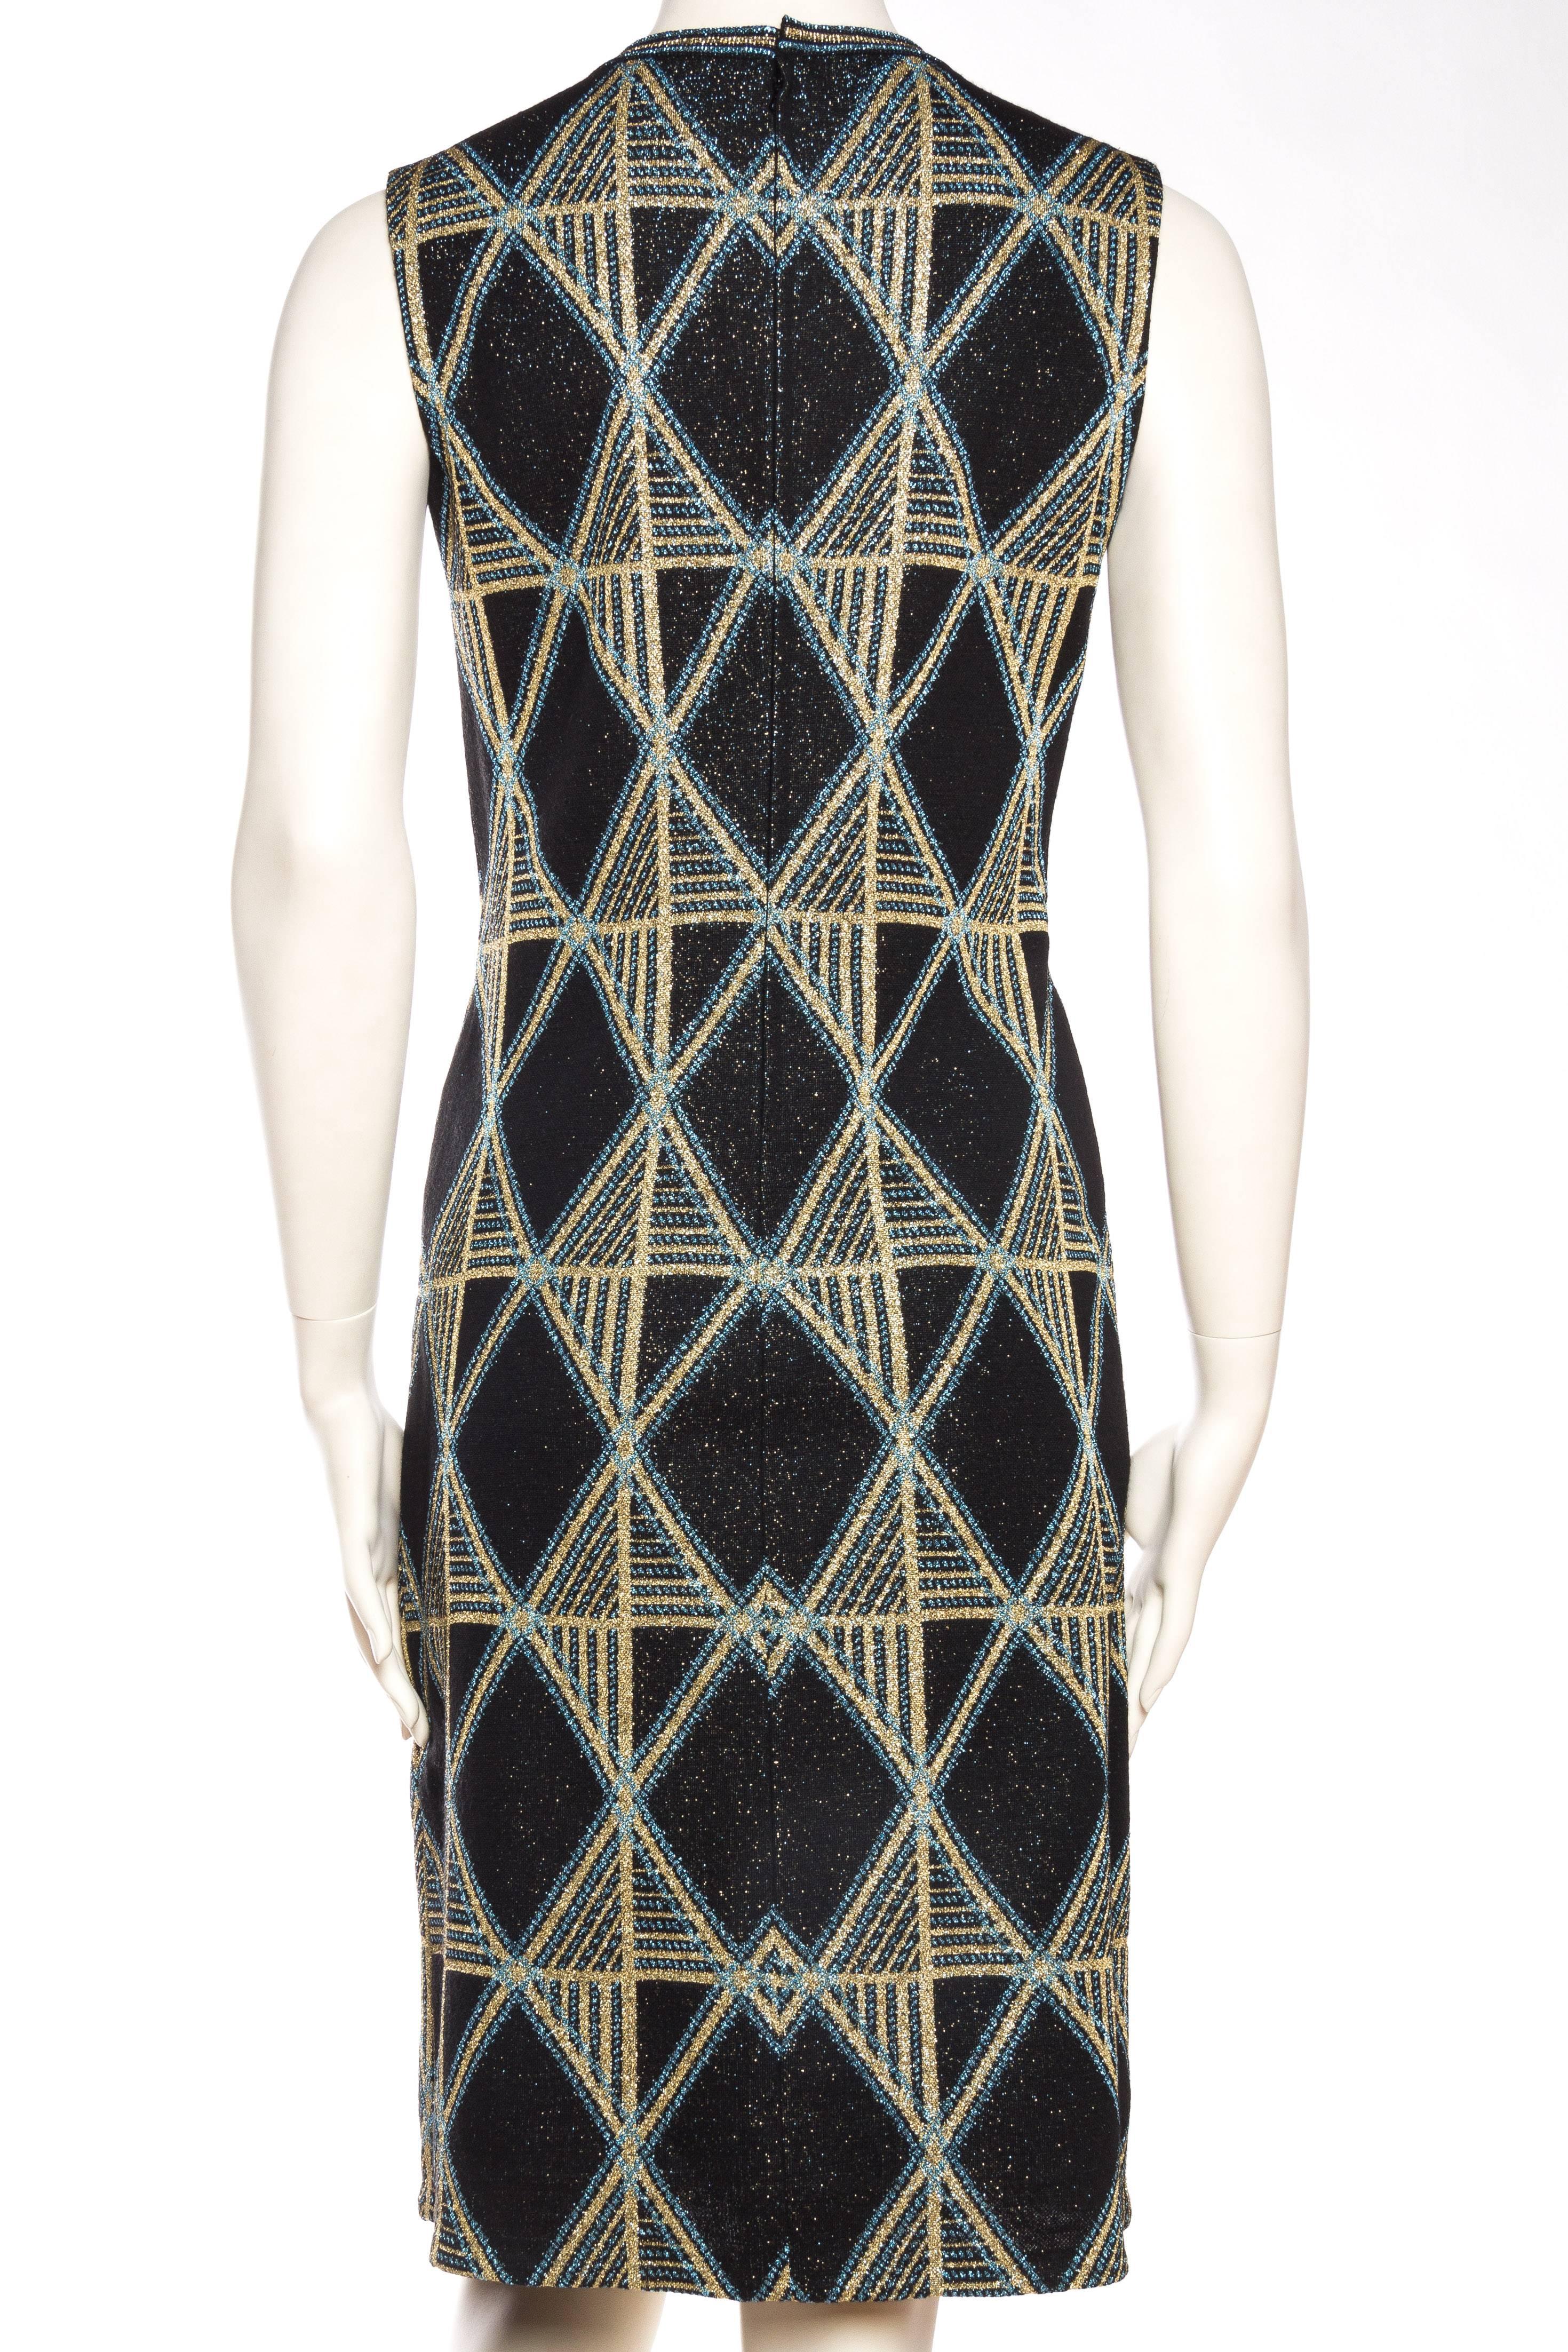 Women's 1960s Mod Pierre Balmain Sparkle Knit Dress